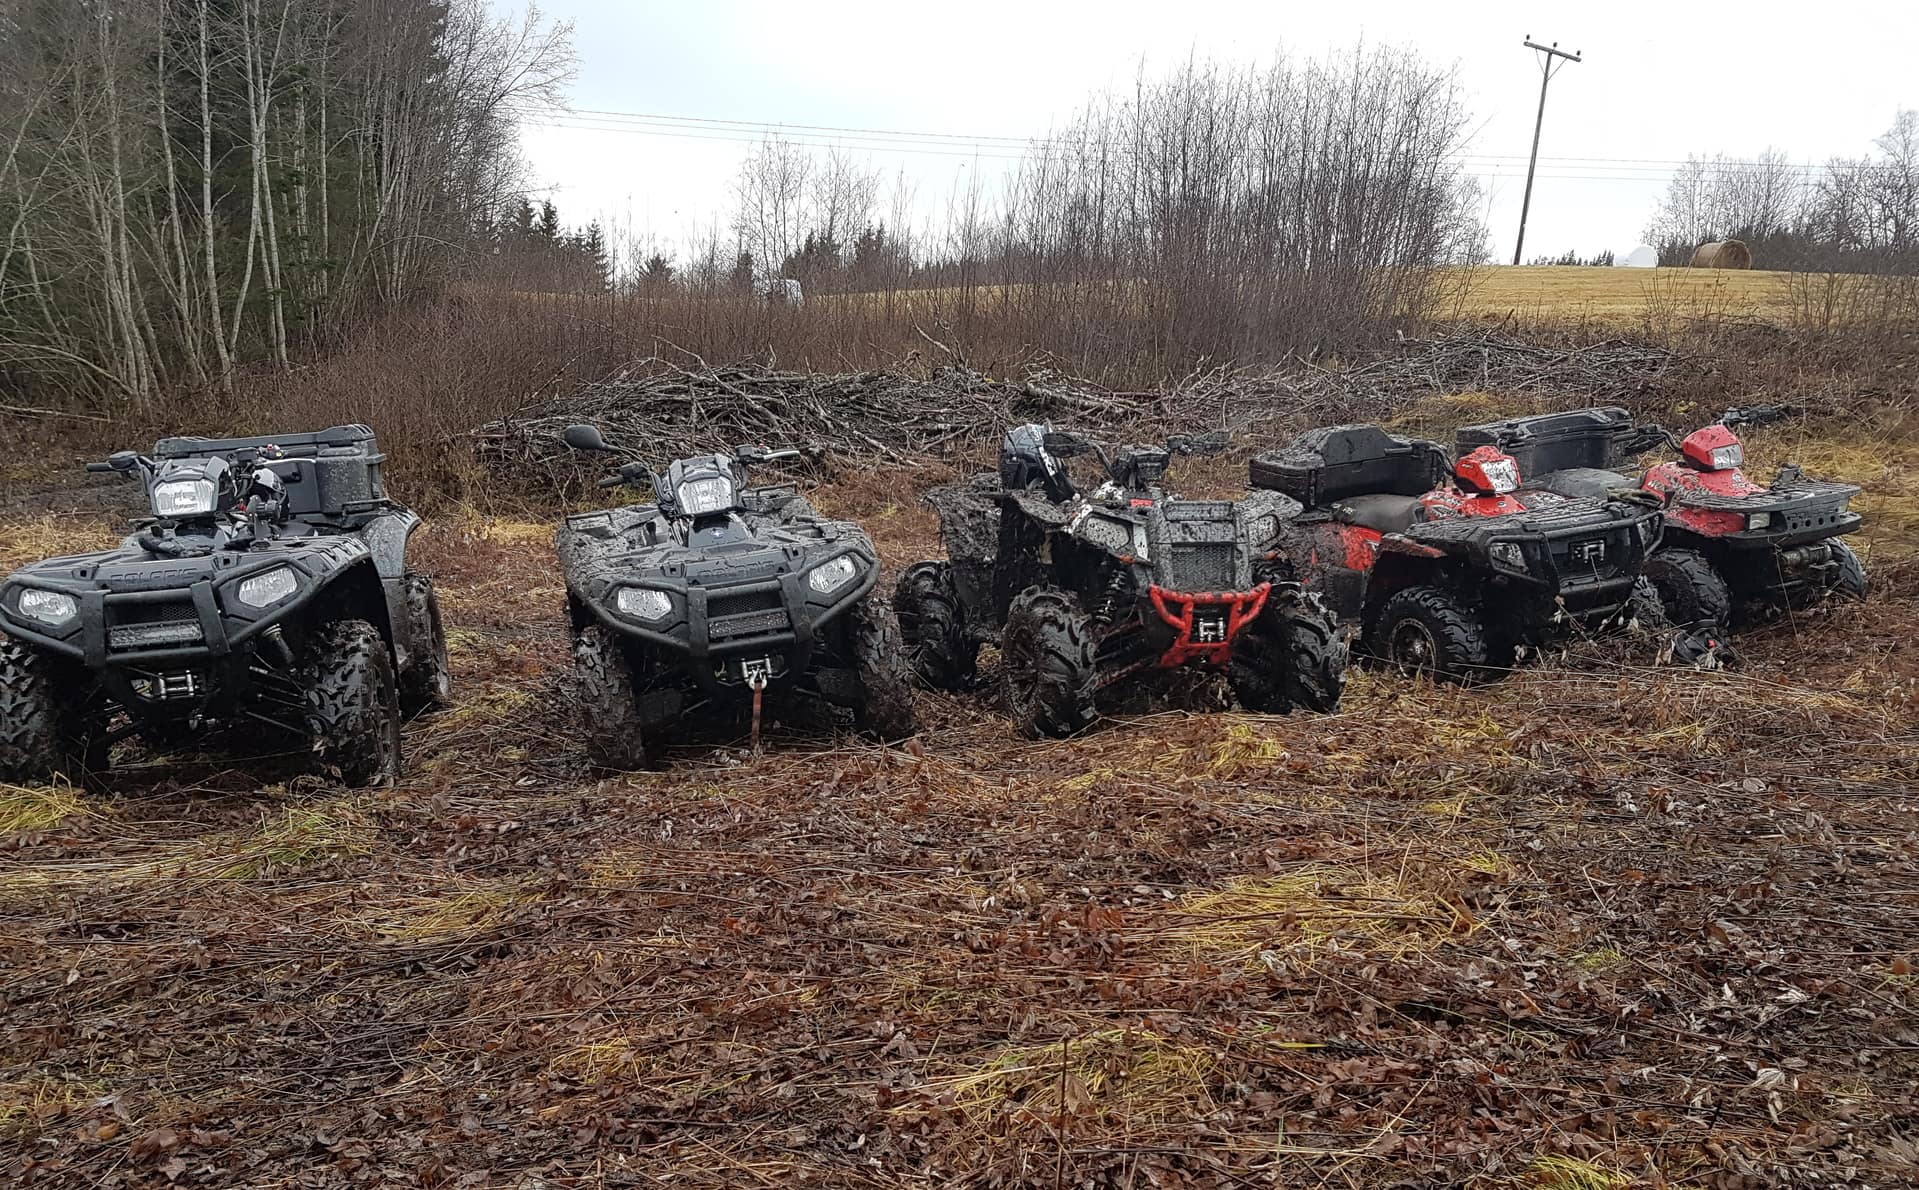 Set of 5 ATVs tasked to tackle muddy autumn terrain